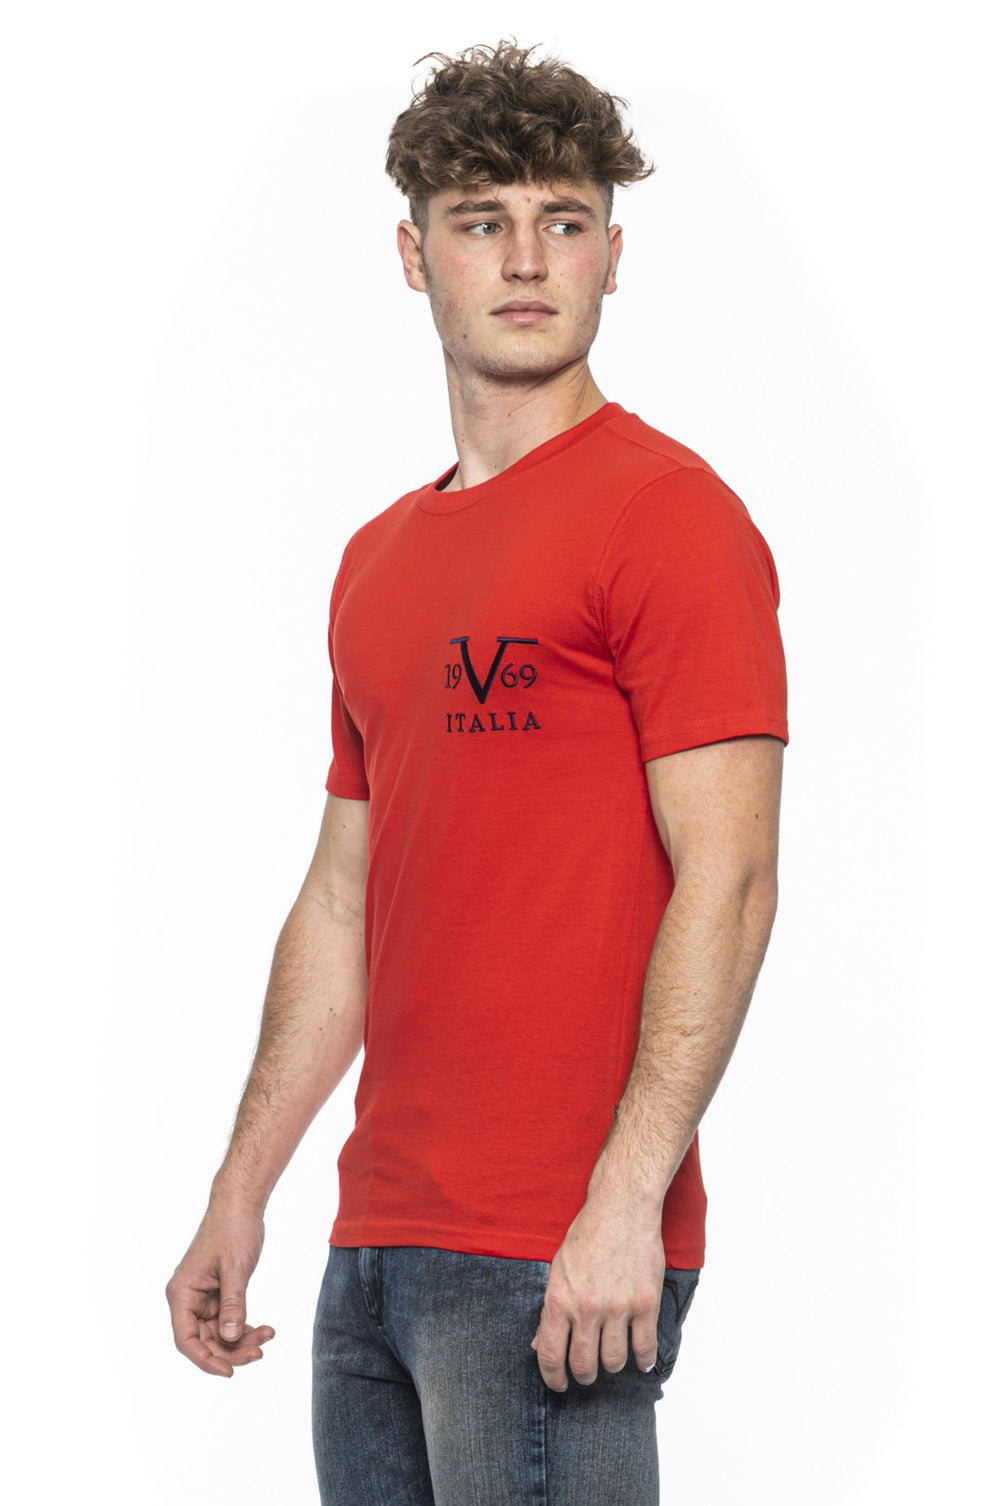 19V69 Italia Mens T-Shirt Red TROY RED